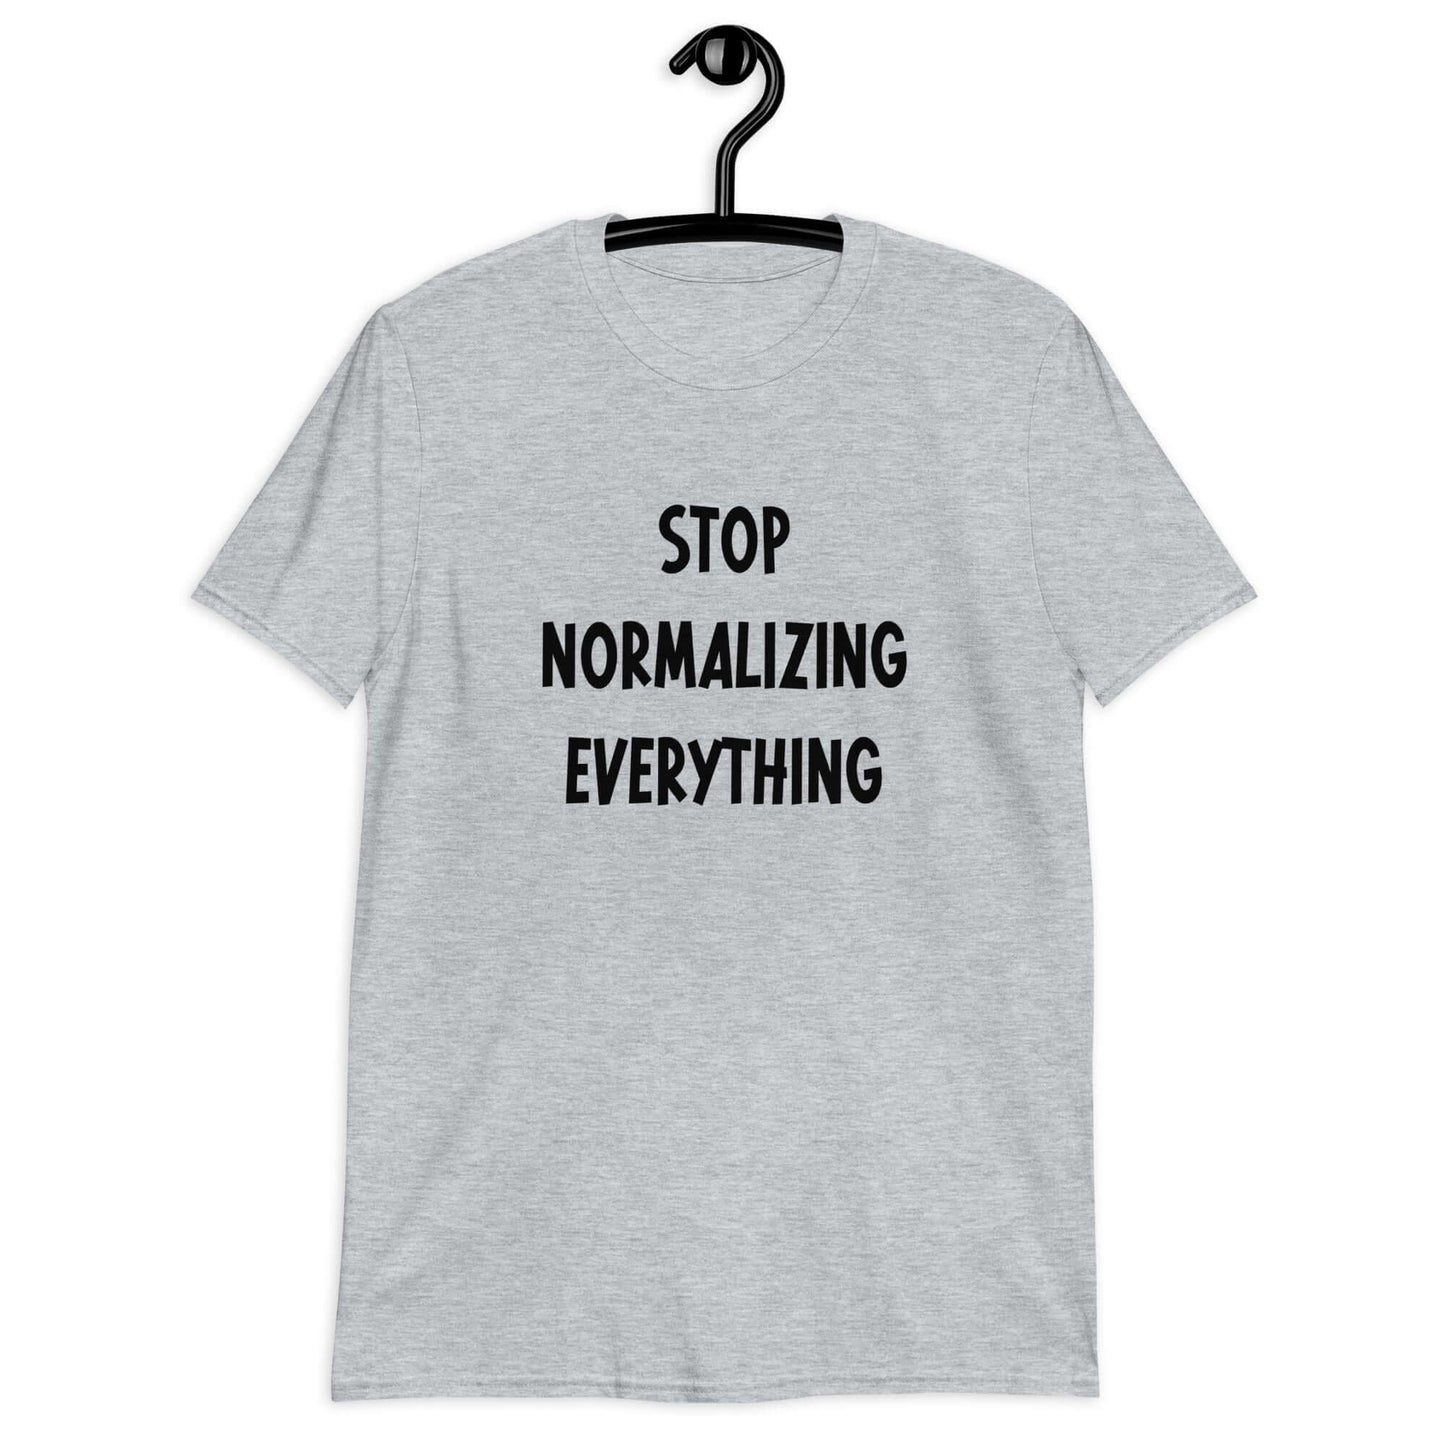 Stop normalizing everything short sleeve T-shirt